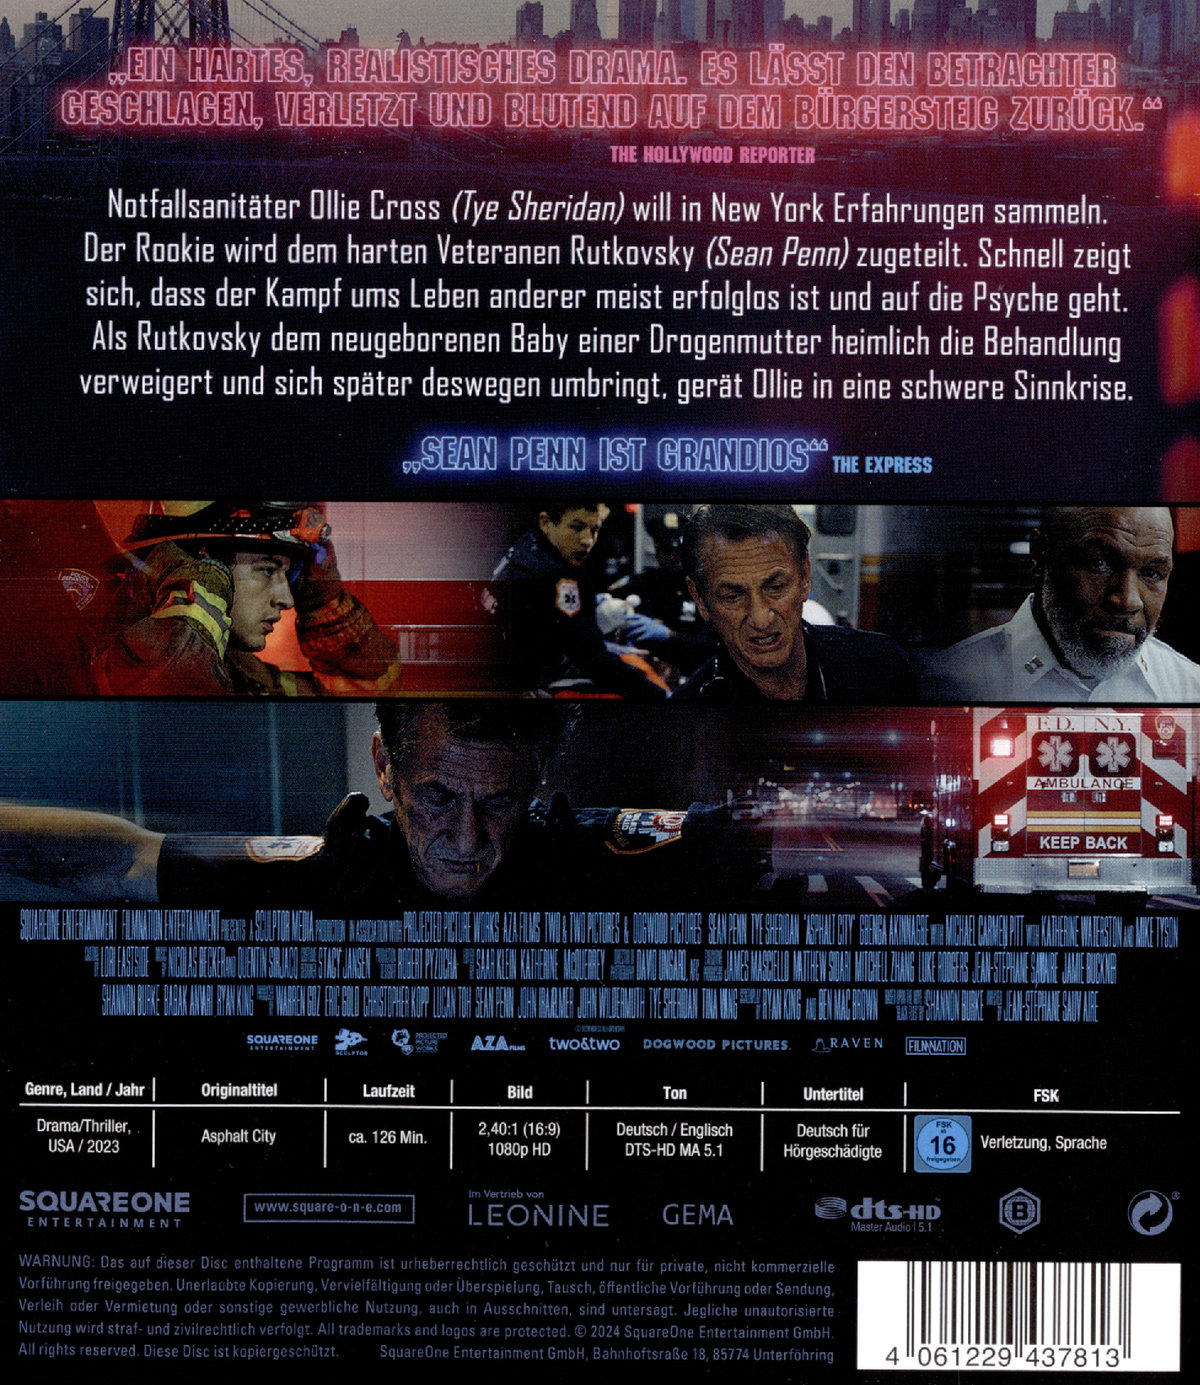 Asphalt City  (Blu-ray Disc)